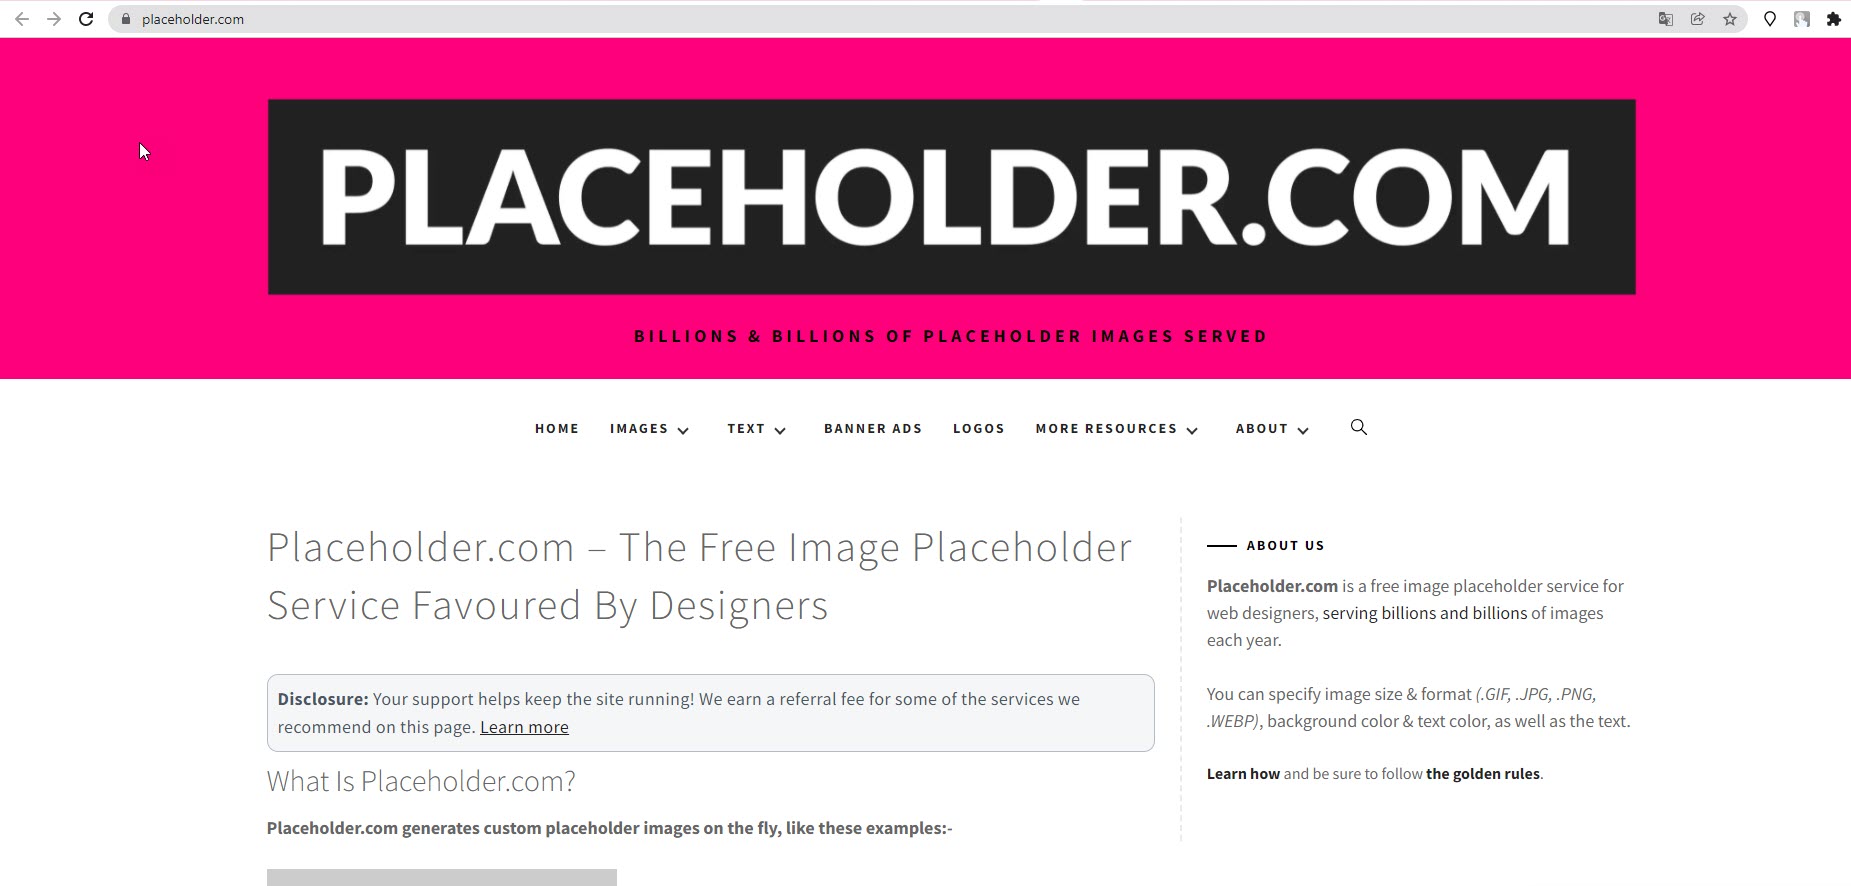 The placeholder.com service